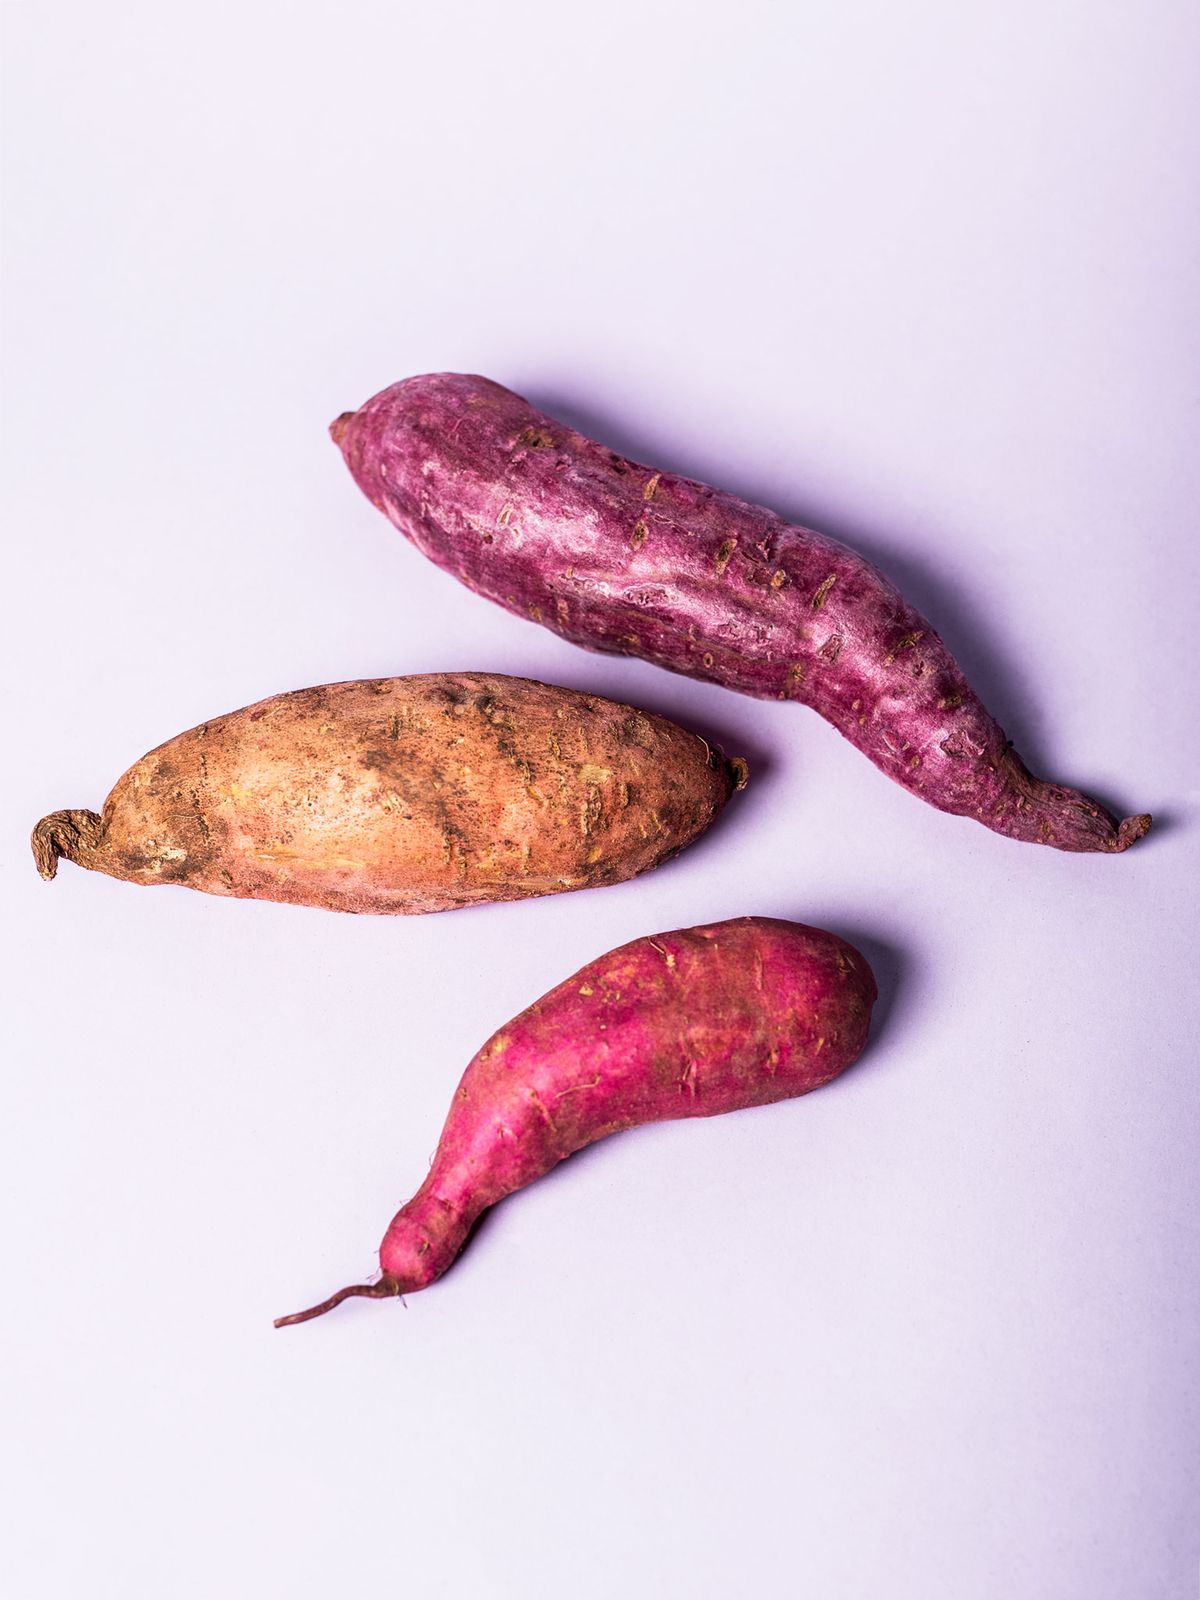 Now in Season: Buying, Storing, and Preparing Sweet Potatoes Properly ...